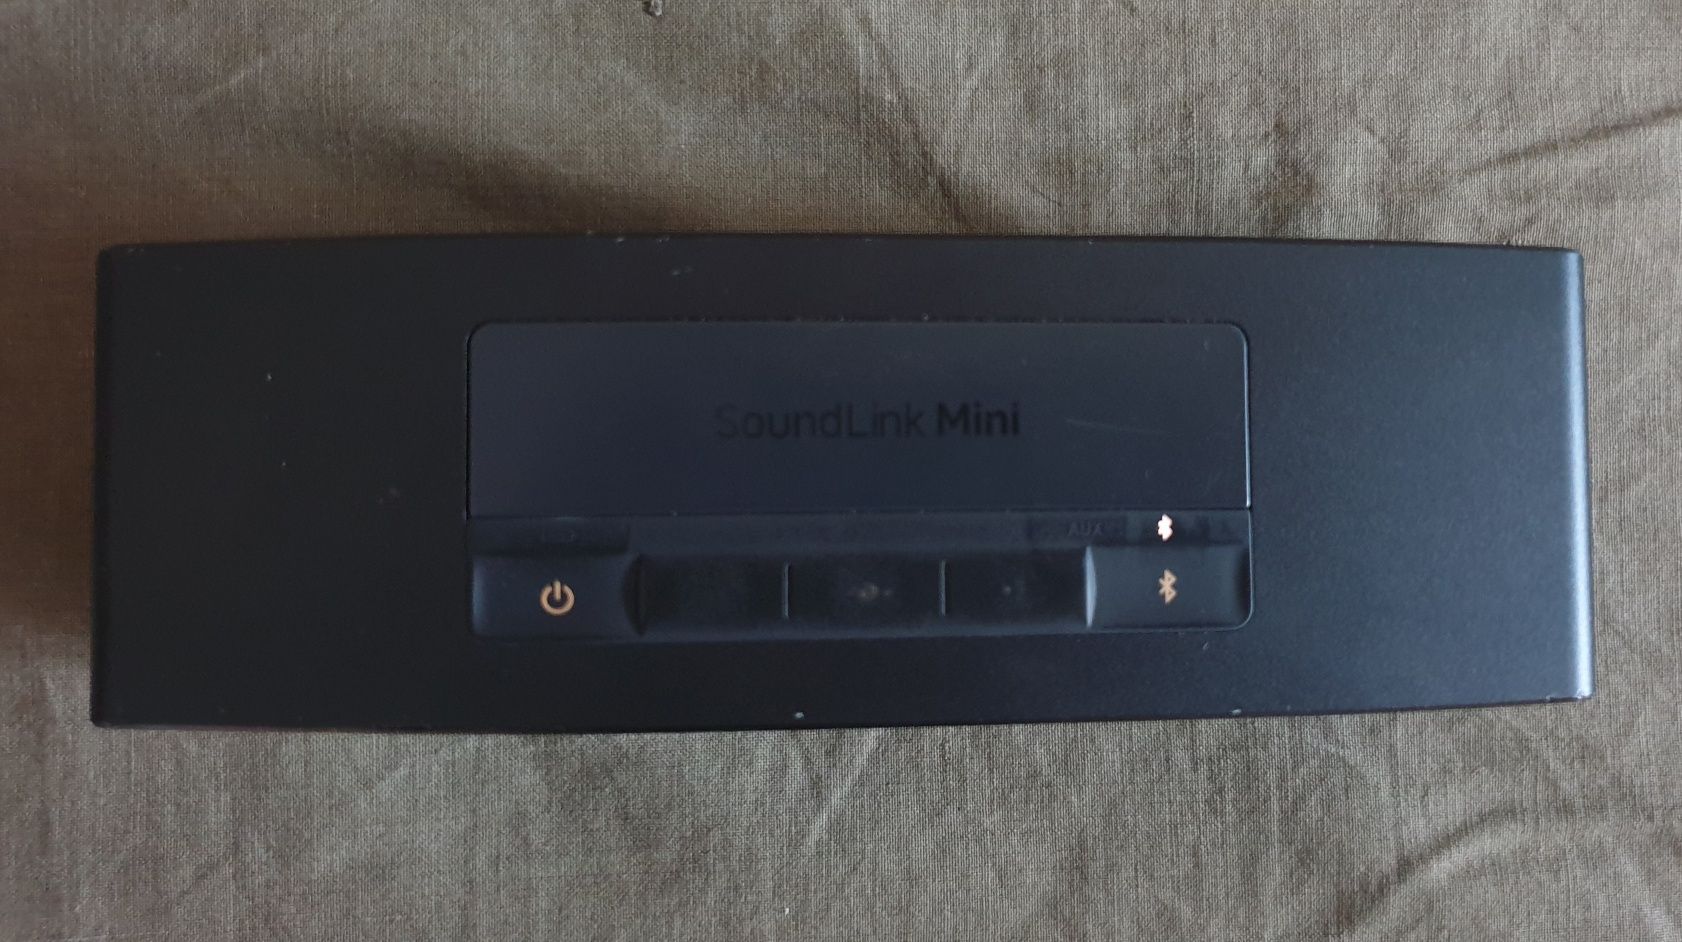 Bose SoundLink Mini 2 Limited Edition